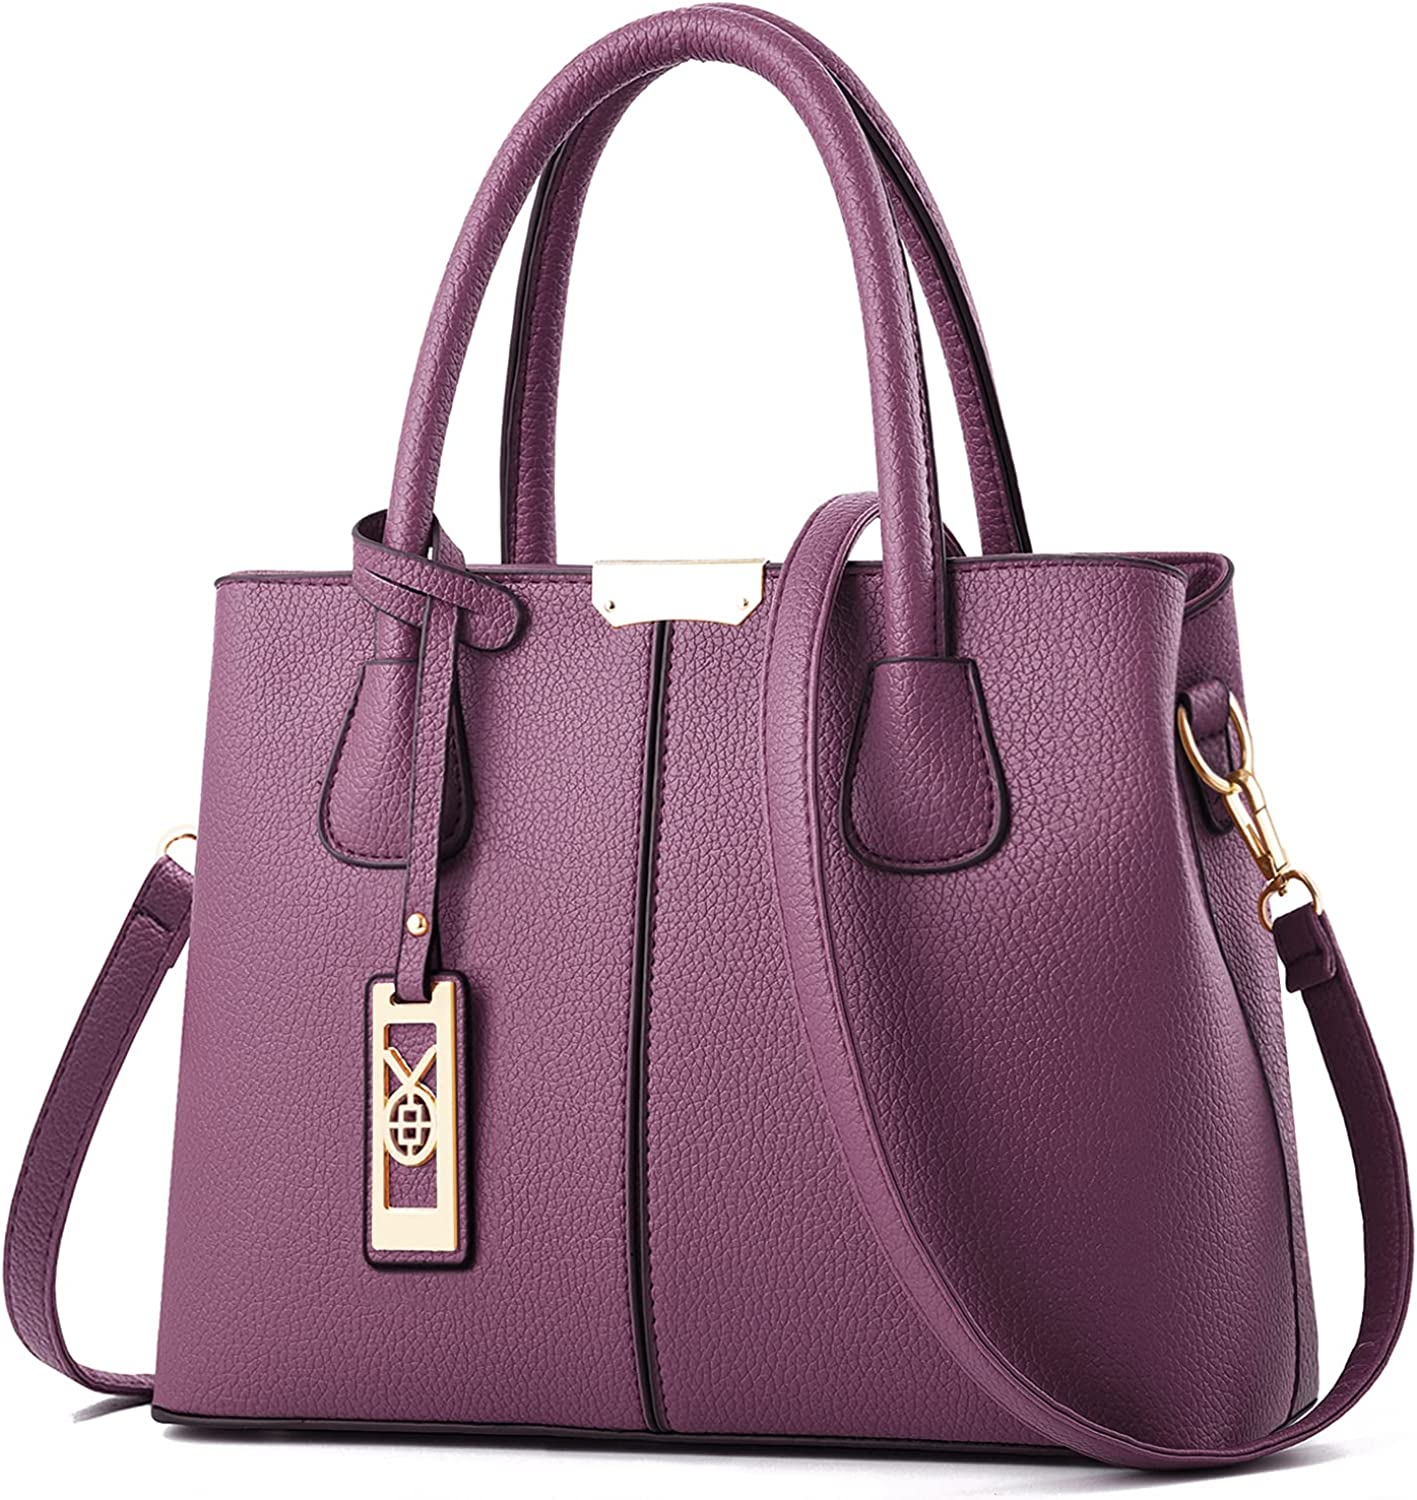 CHICAROUSAL Purses and Handbags for Women Leather Crossbody Bags Women's  Tote Sh | eBay